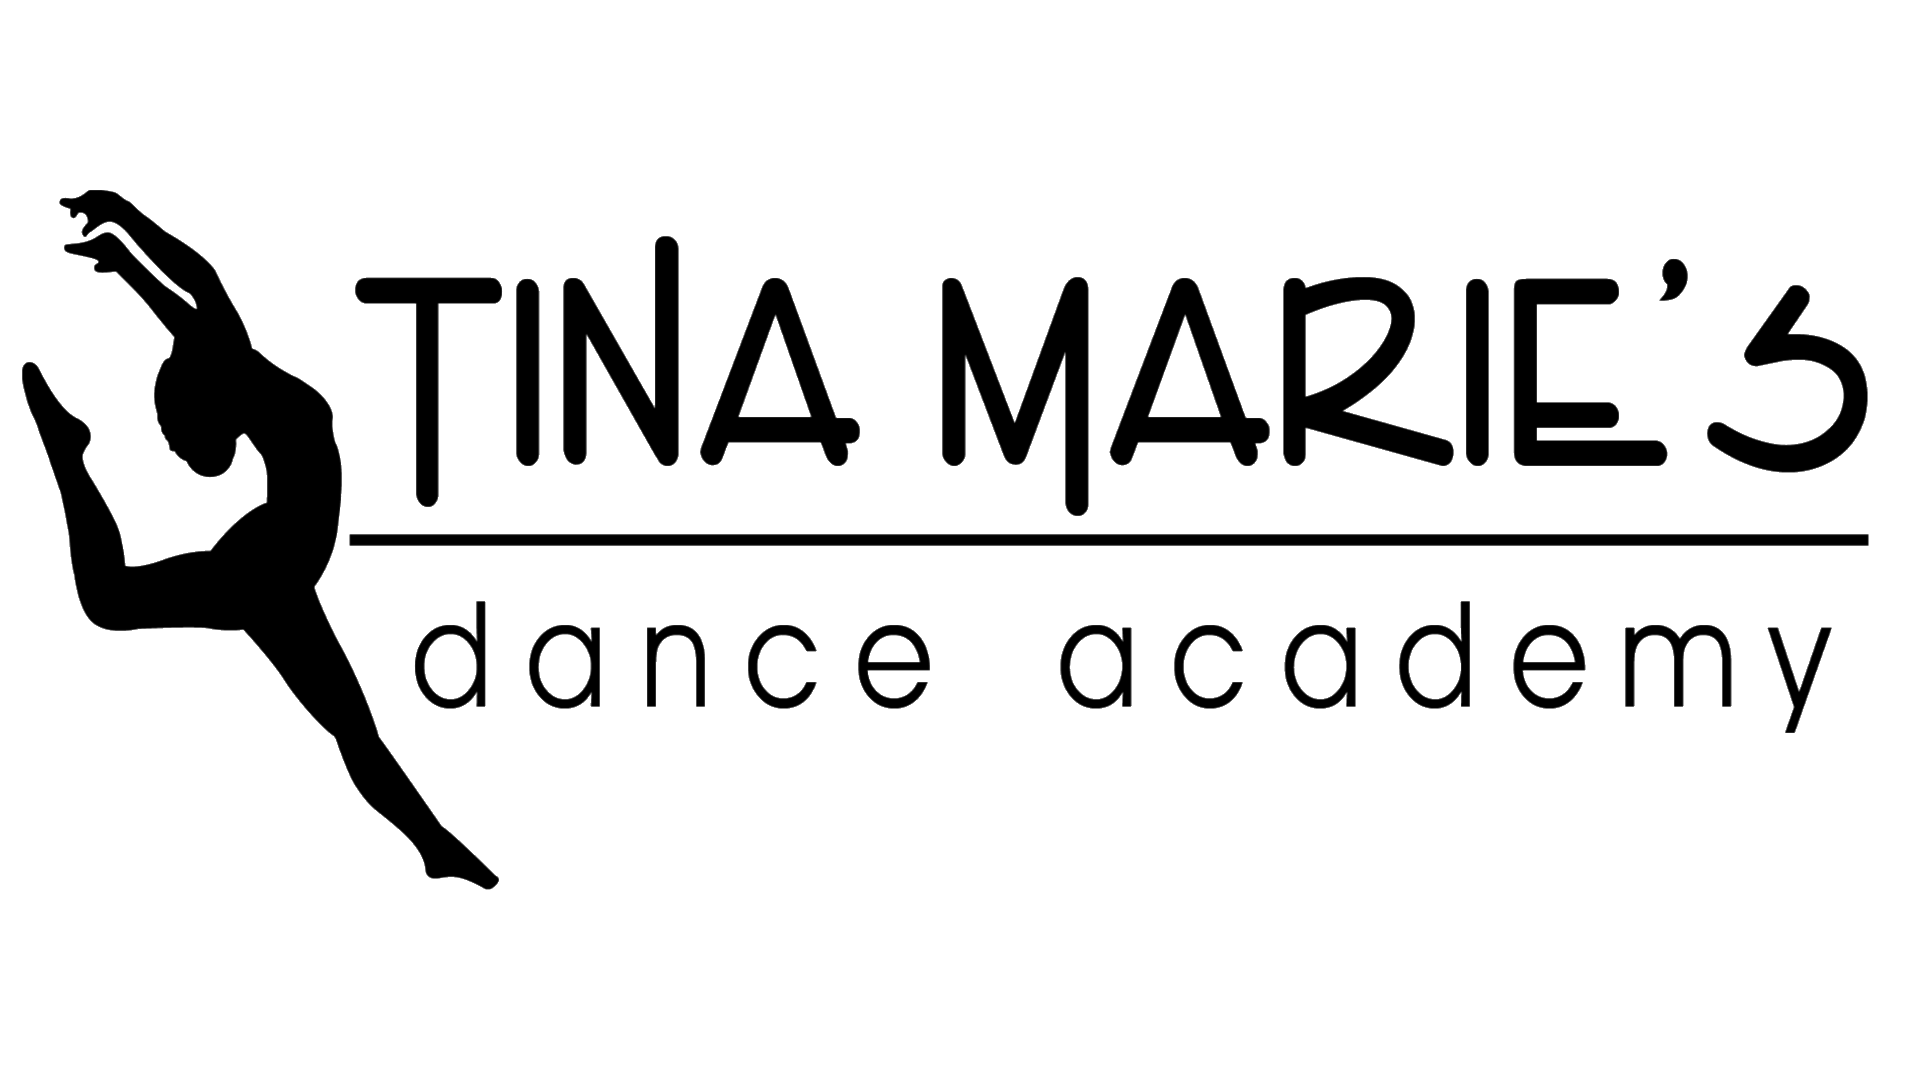 Dance school dance academy logo Template | PosterMyWall